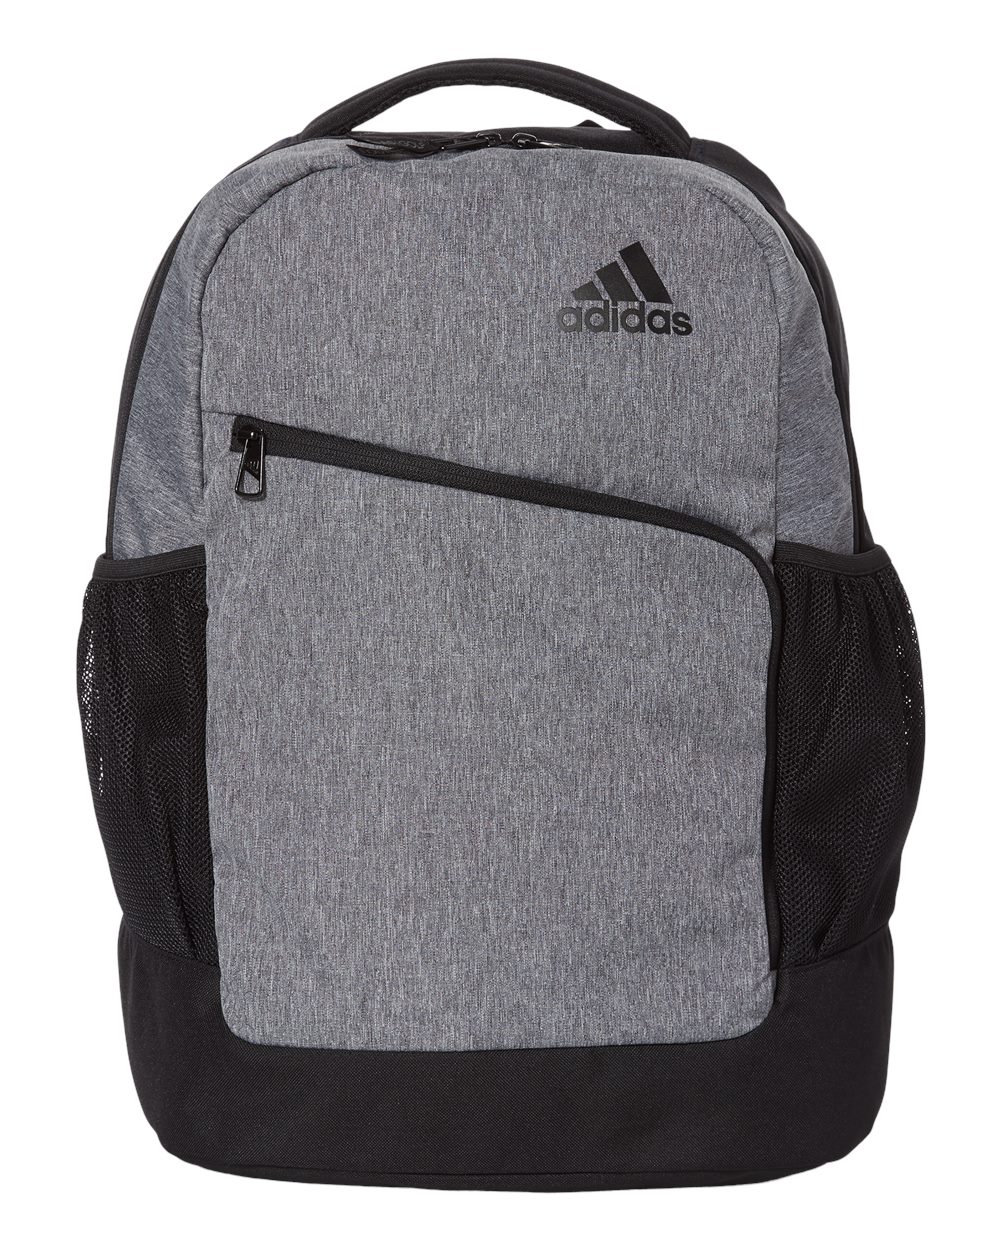 adidas shop backpack